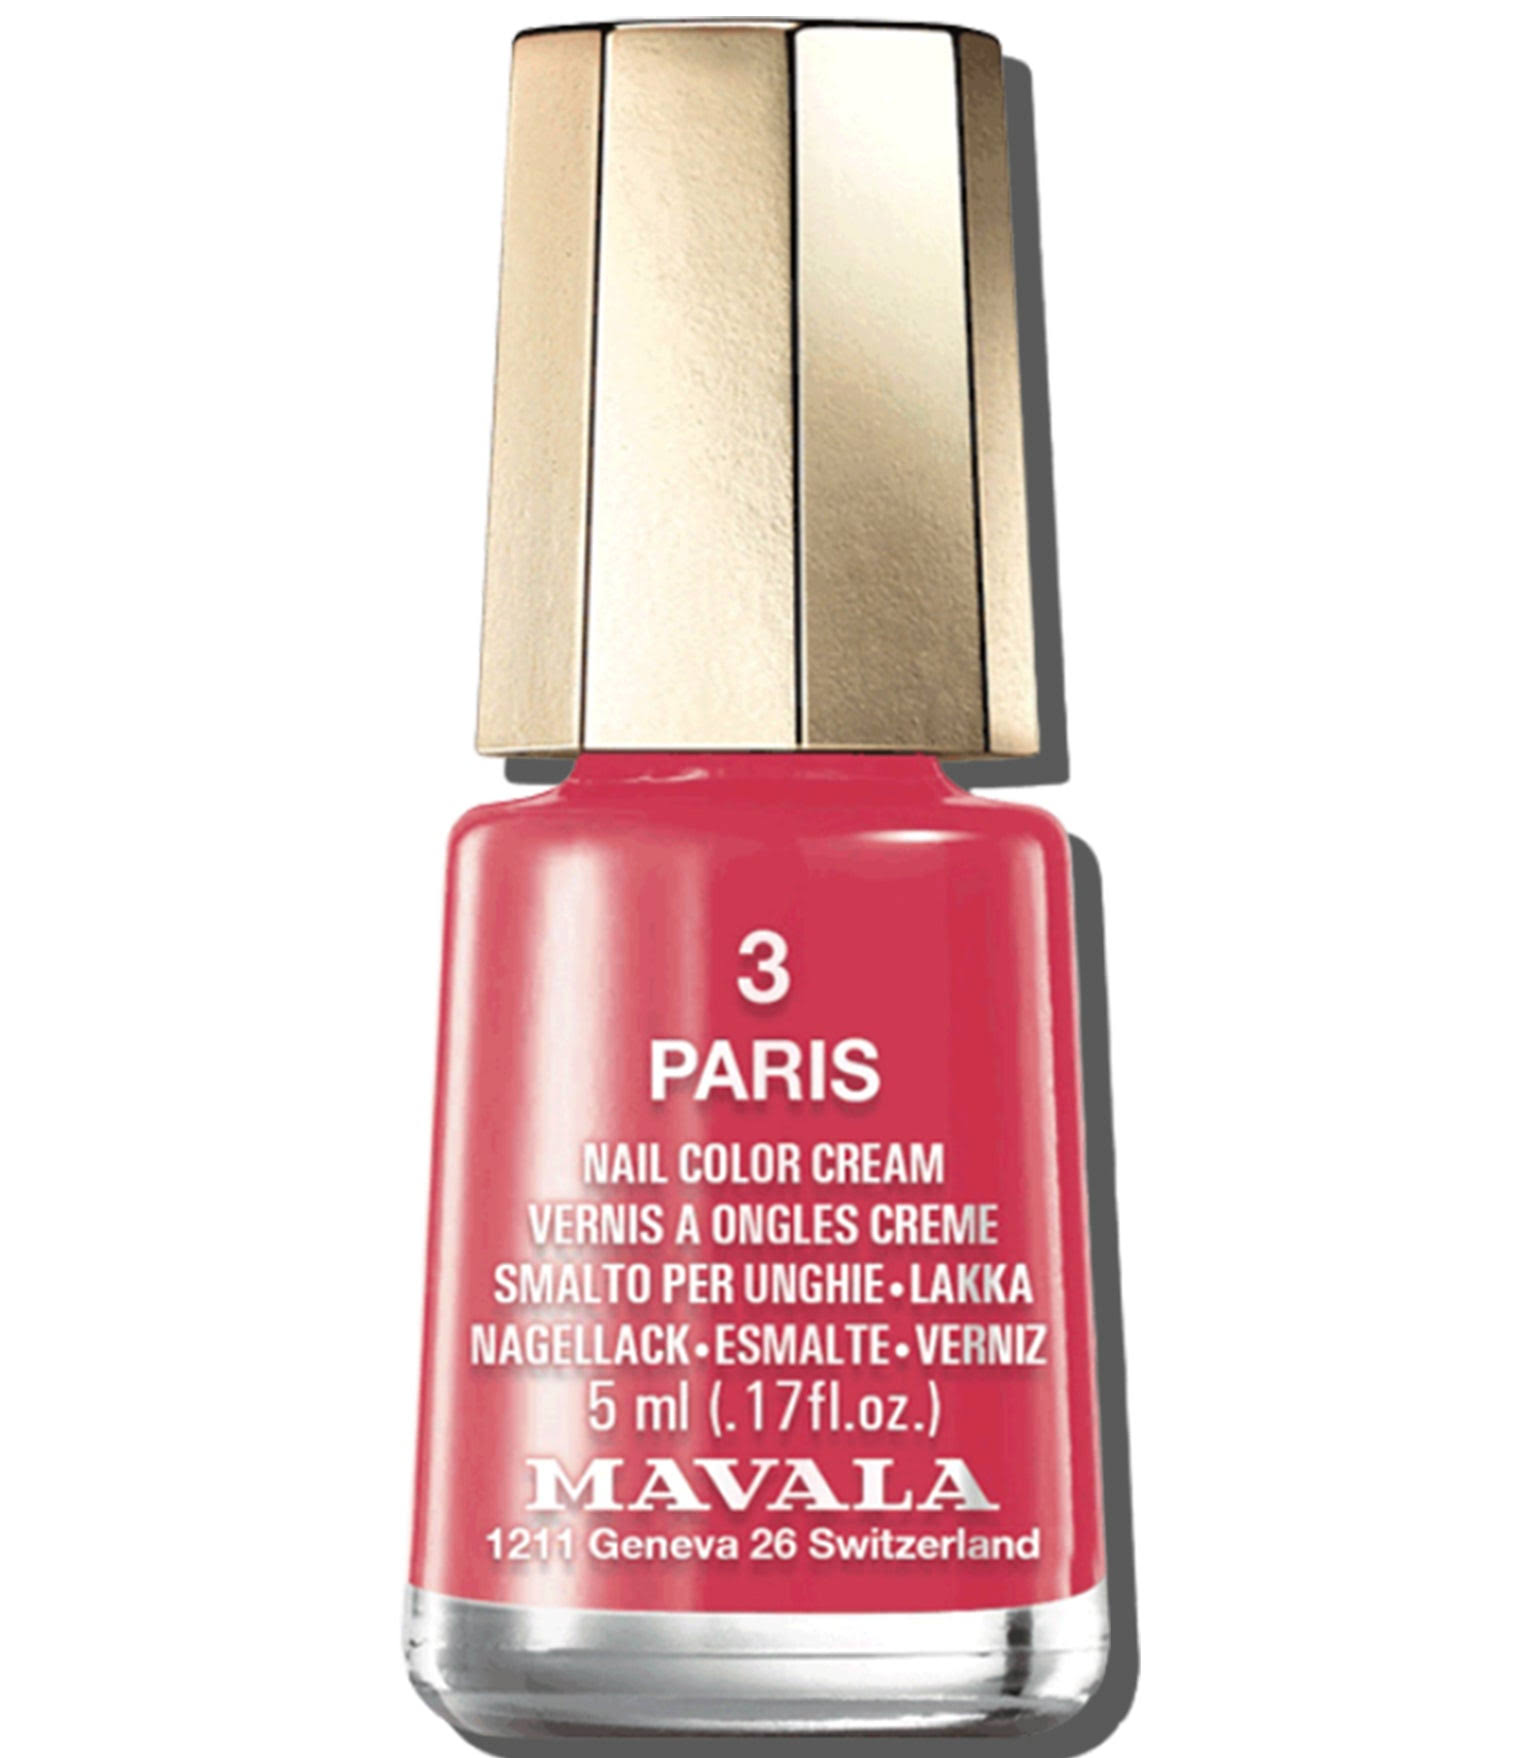 Mavala Switzerland Nail Colour Cream - 3 Paris